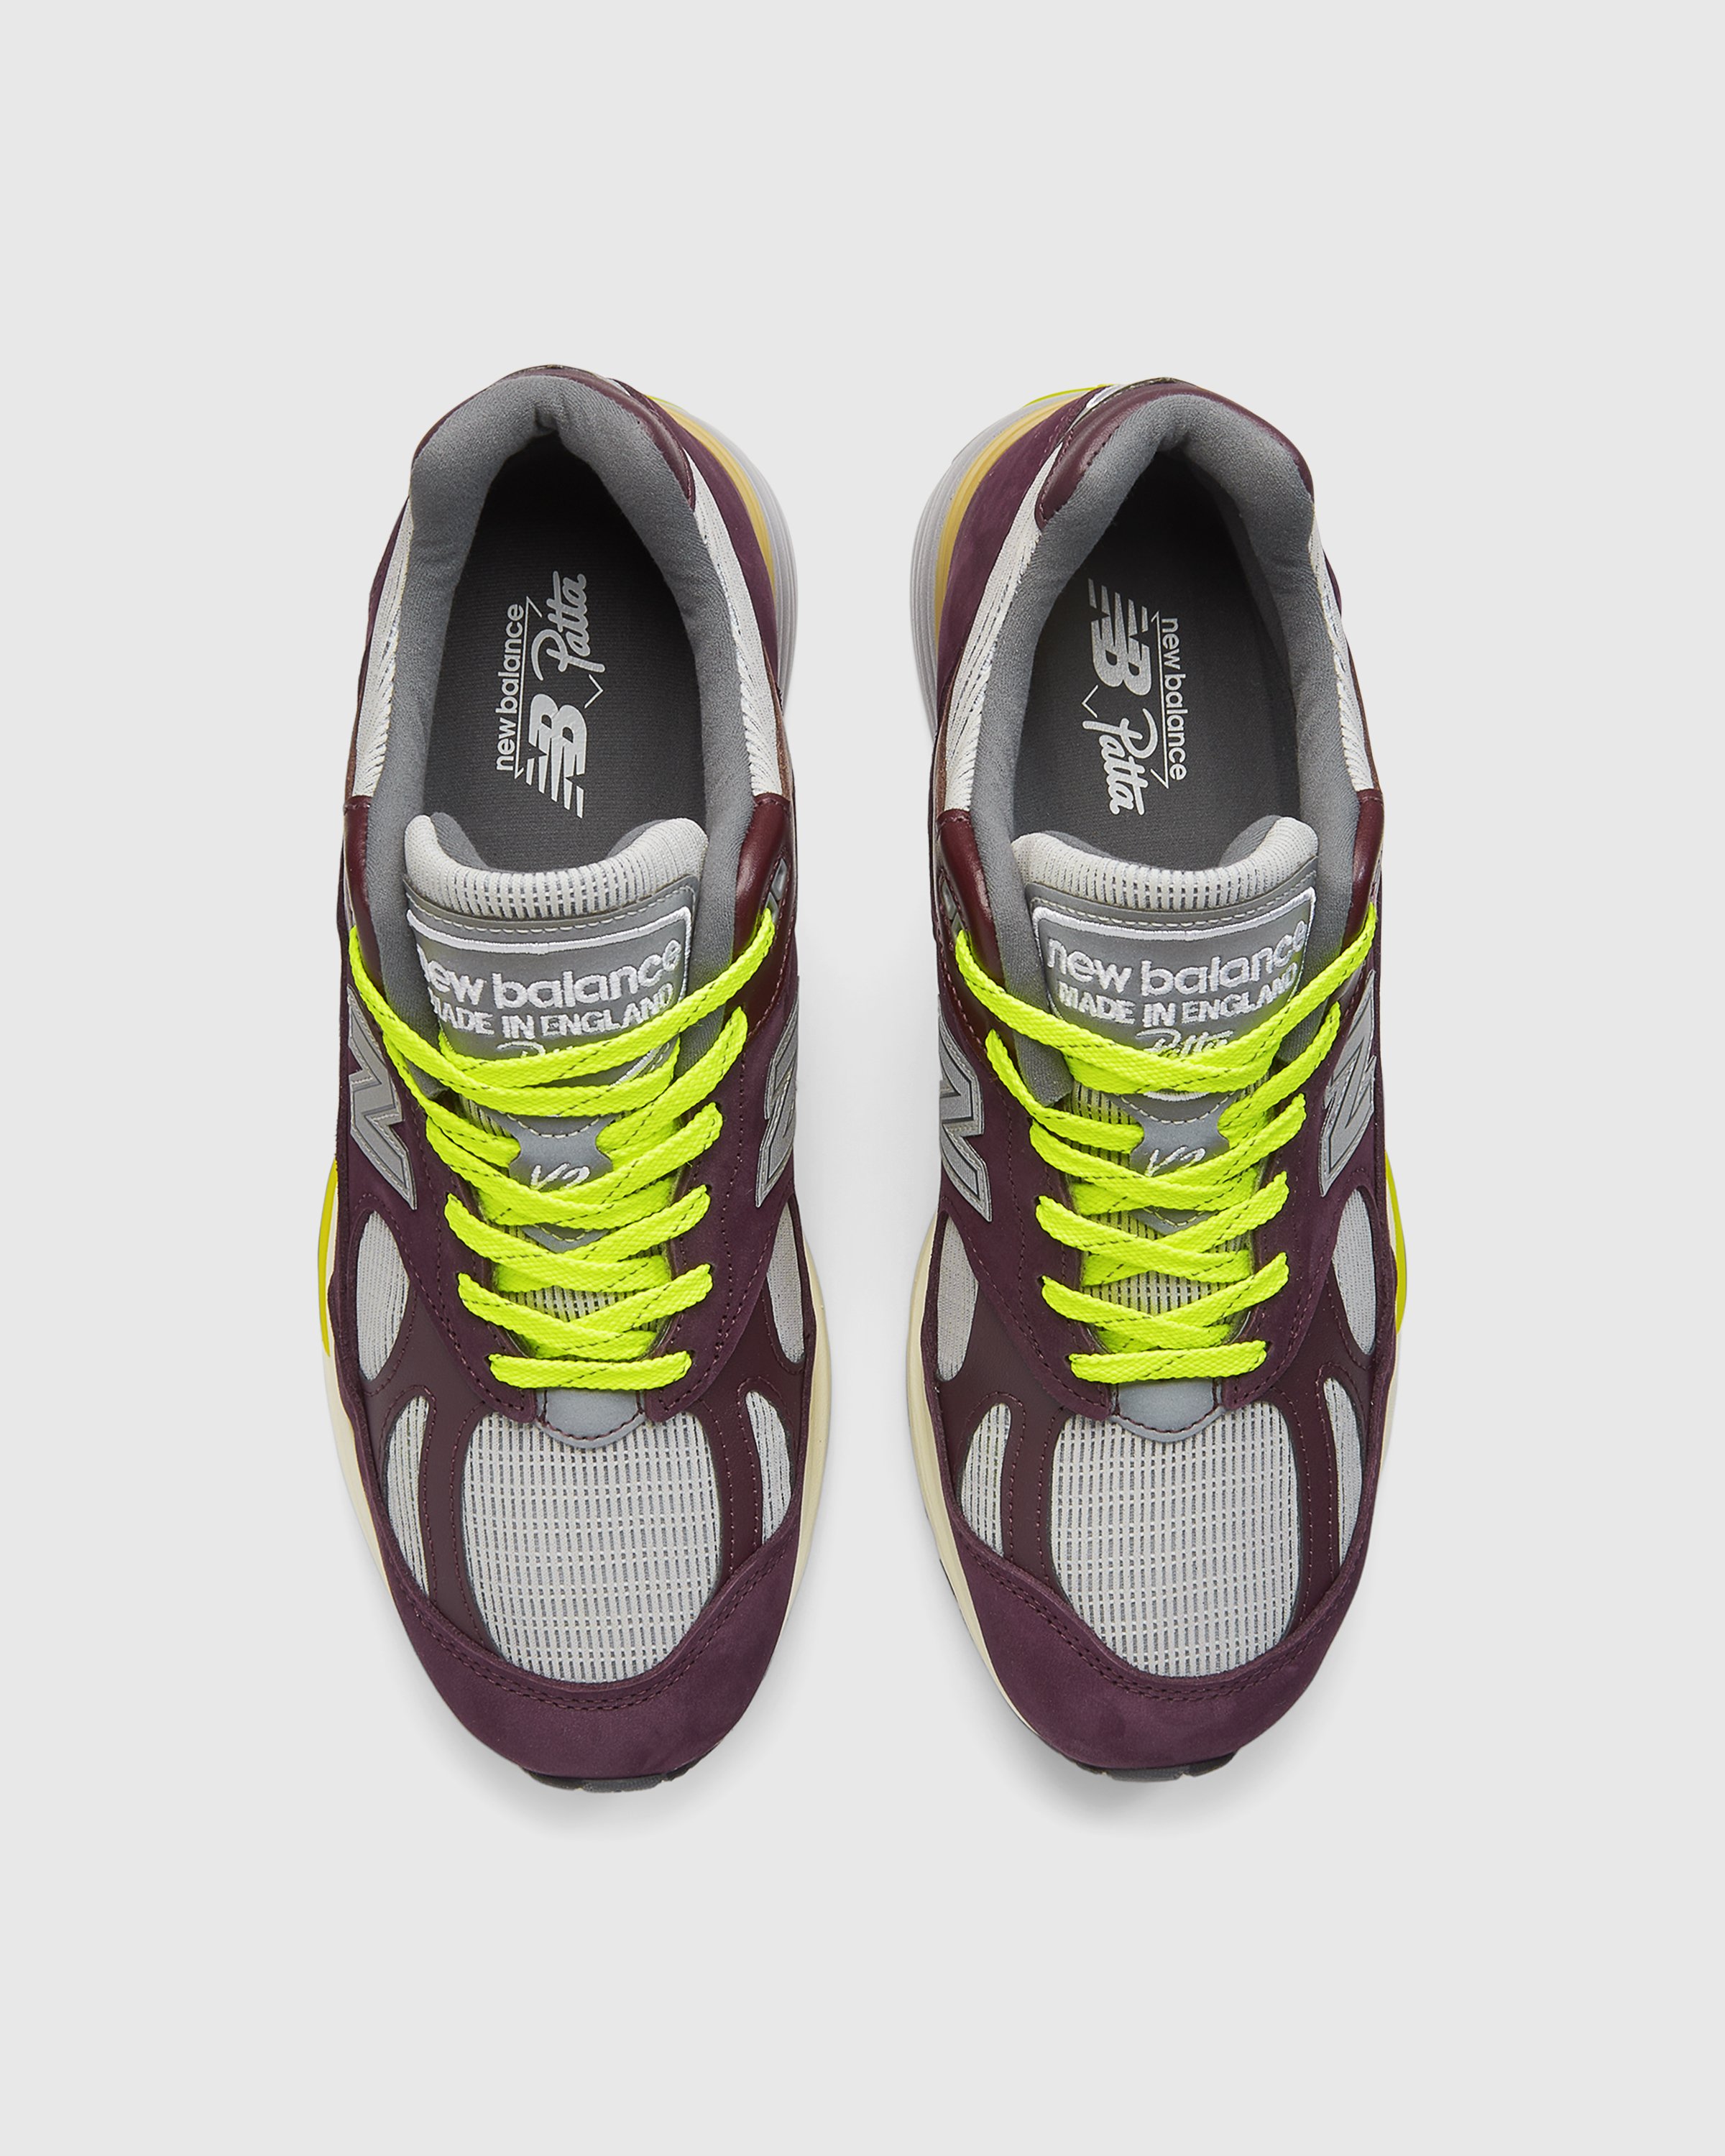 Patta x New Balance - 991v2 Pickled Beet - Footwear - Purple - Image 5